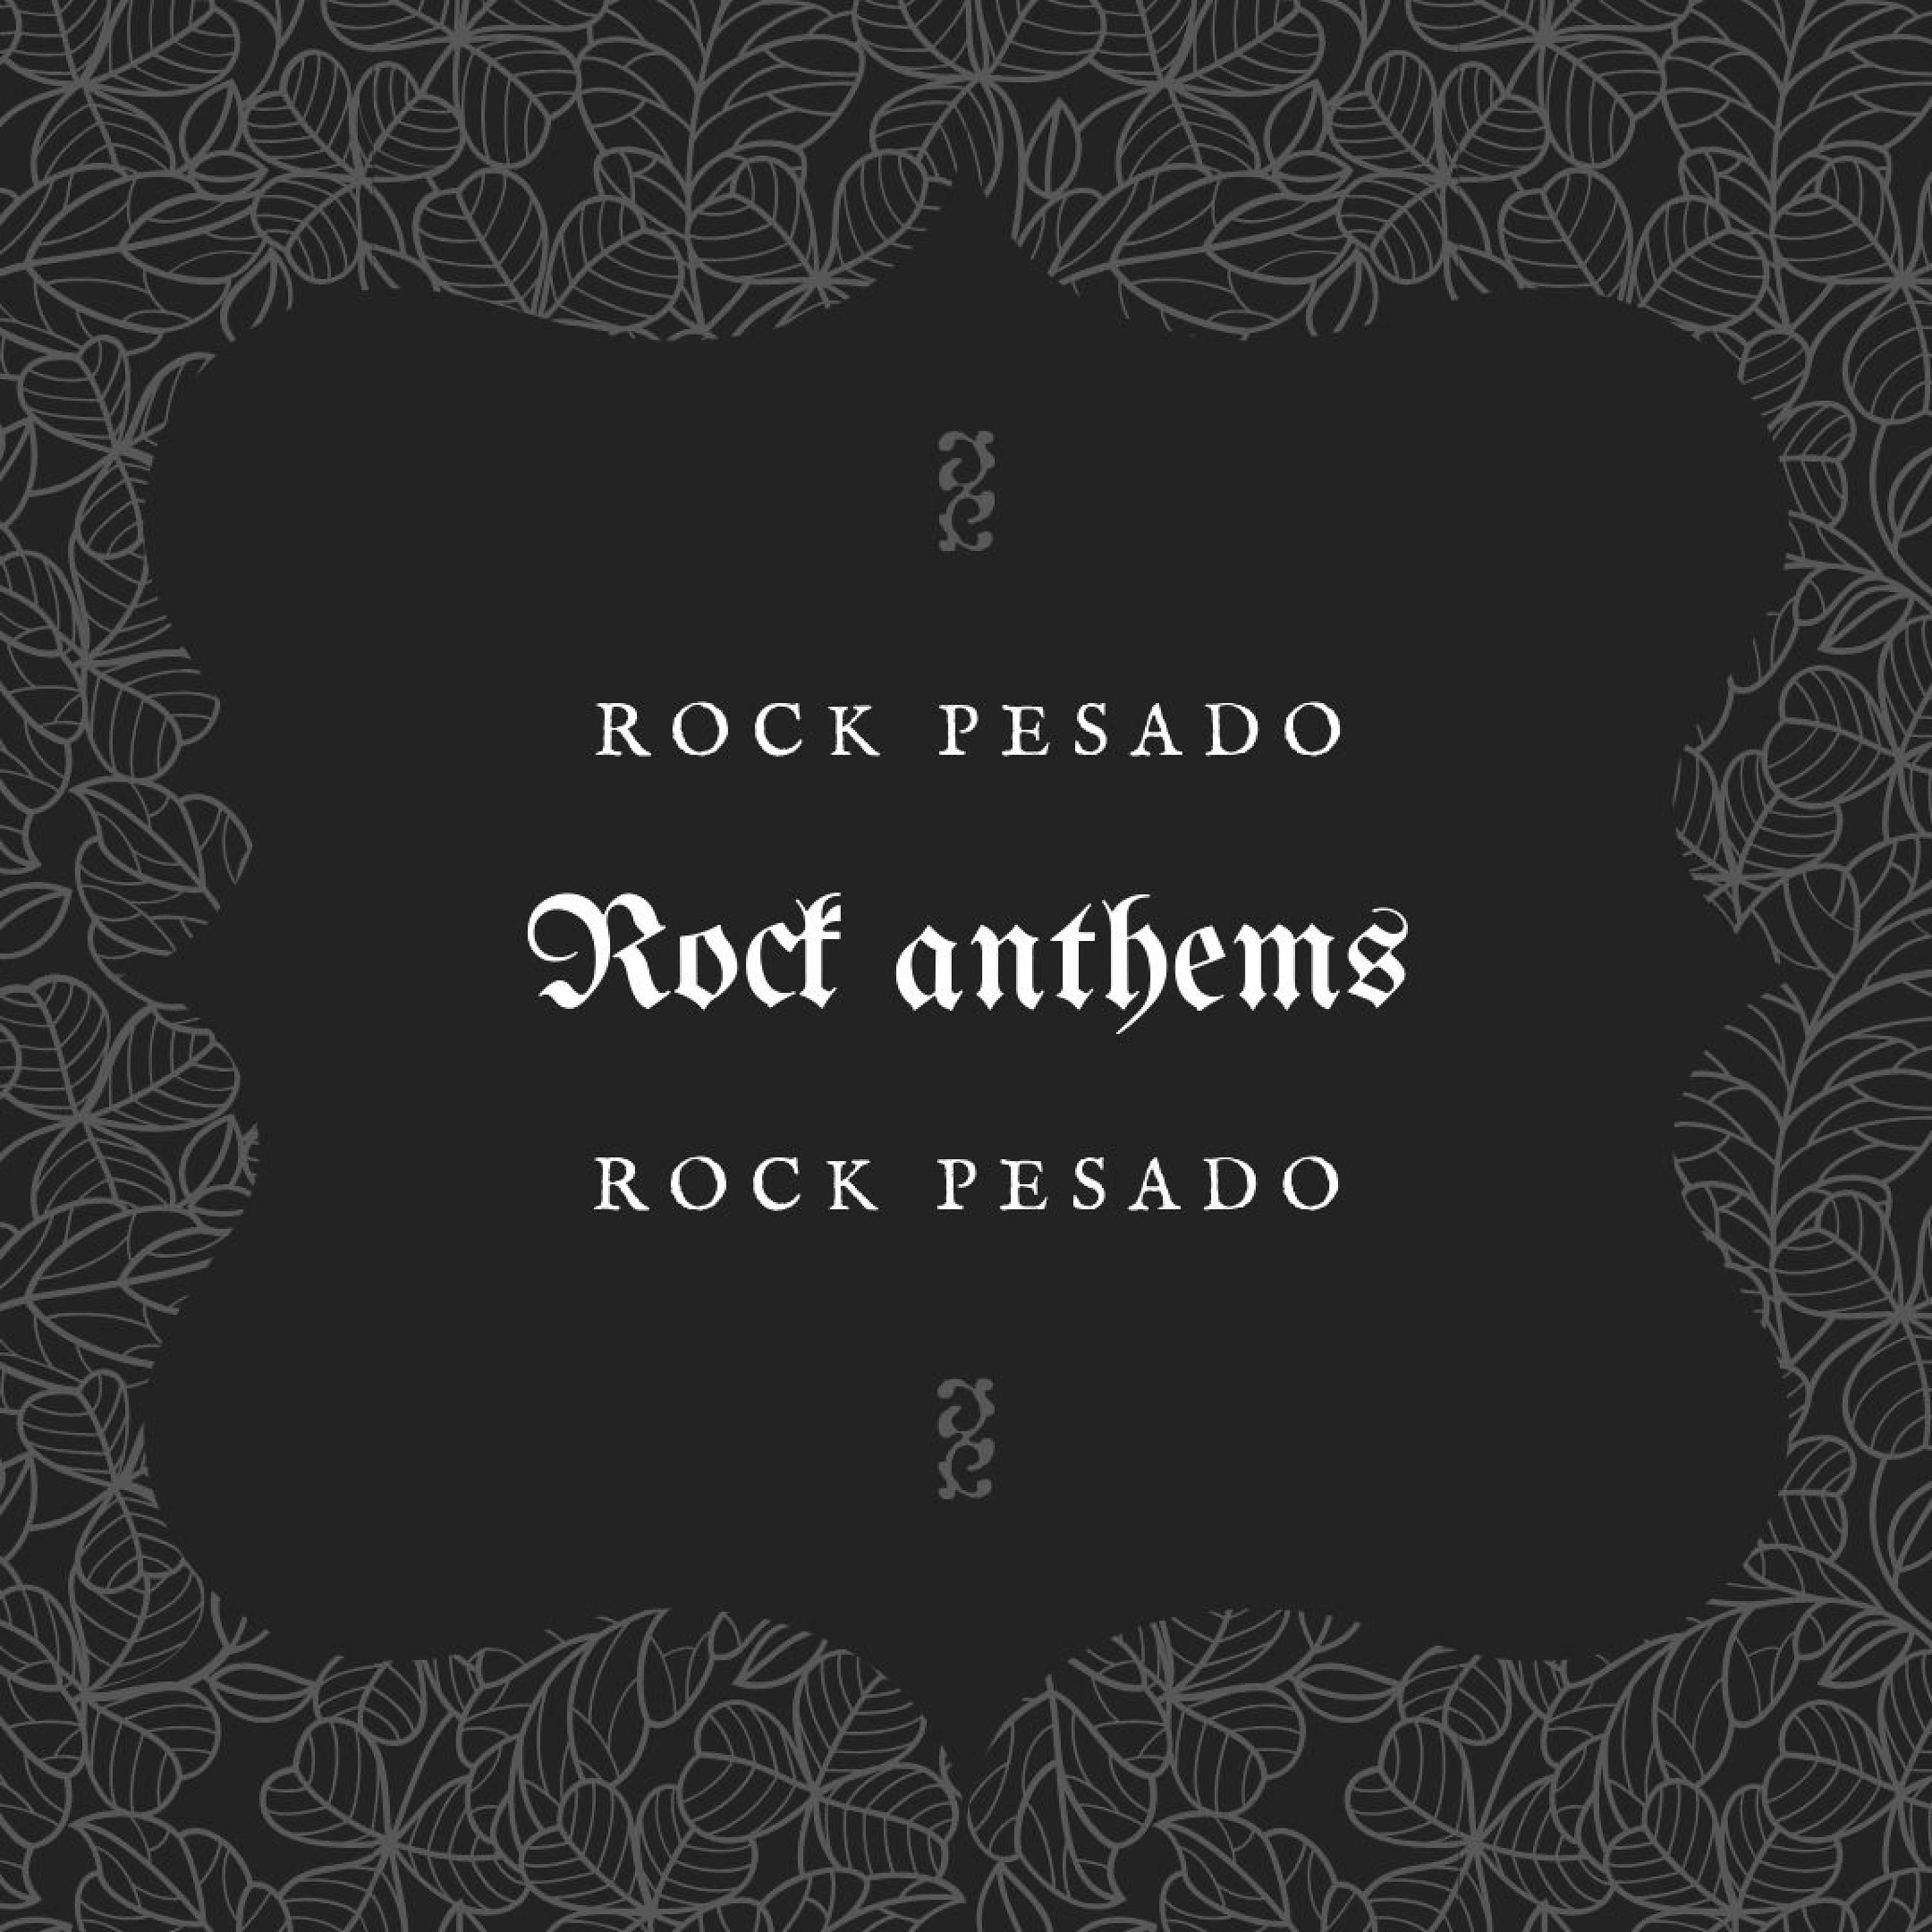 Постер альбома Rock Anthems